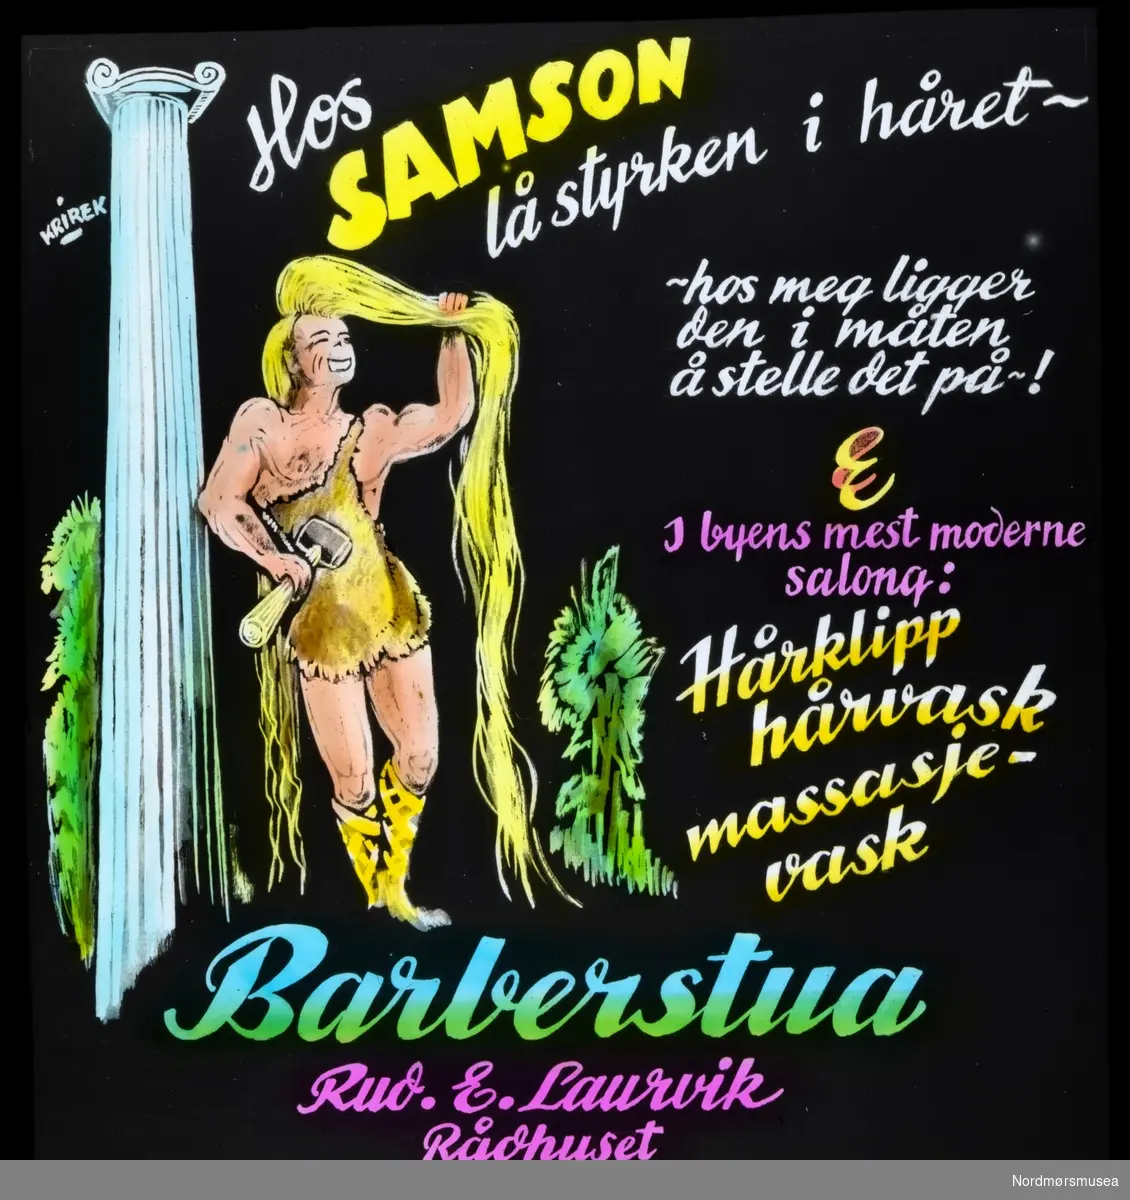 Barberstua. Rud E. Laurvik. Kinoreklame fra Kristiansund, hovedsaklig fra perioden 1950 til 1980.